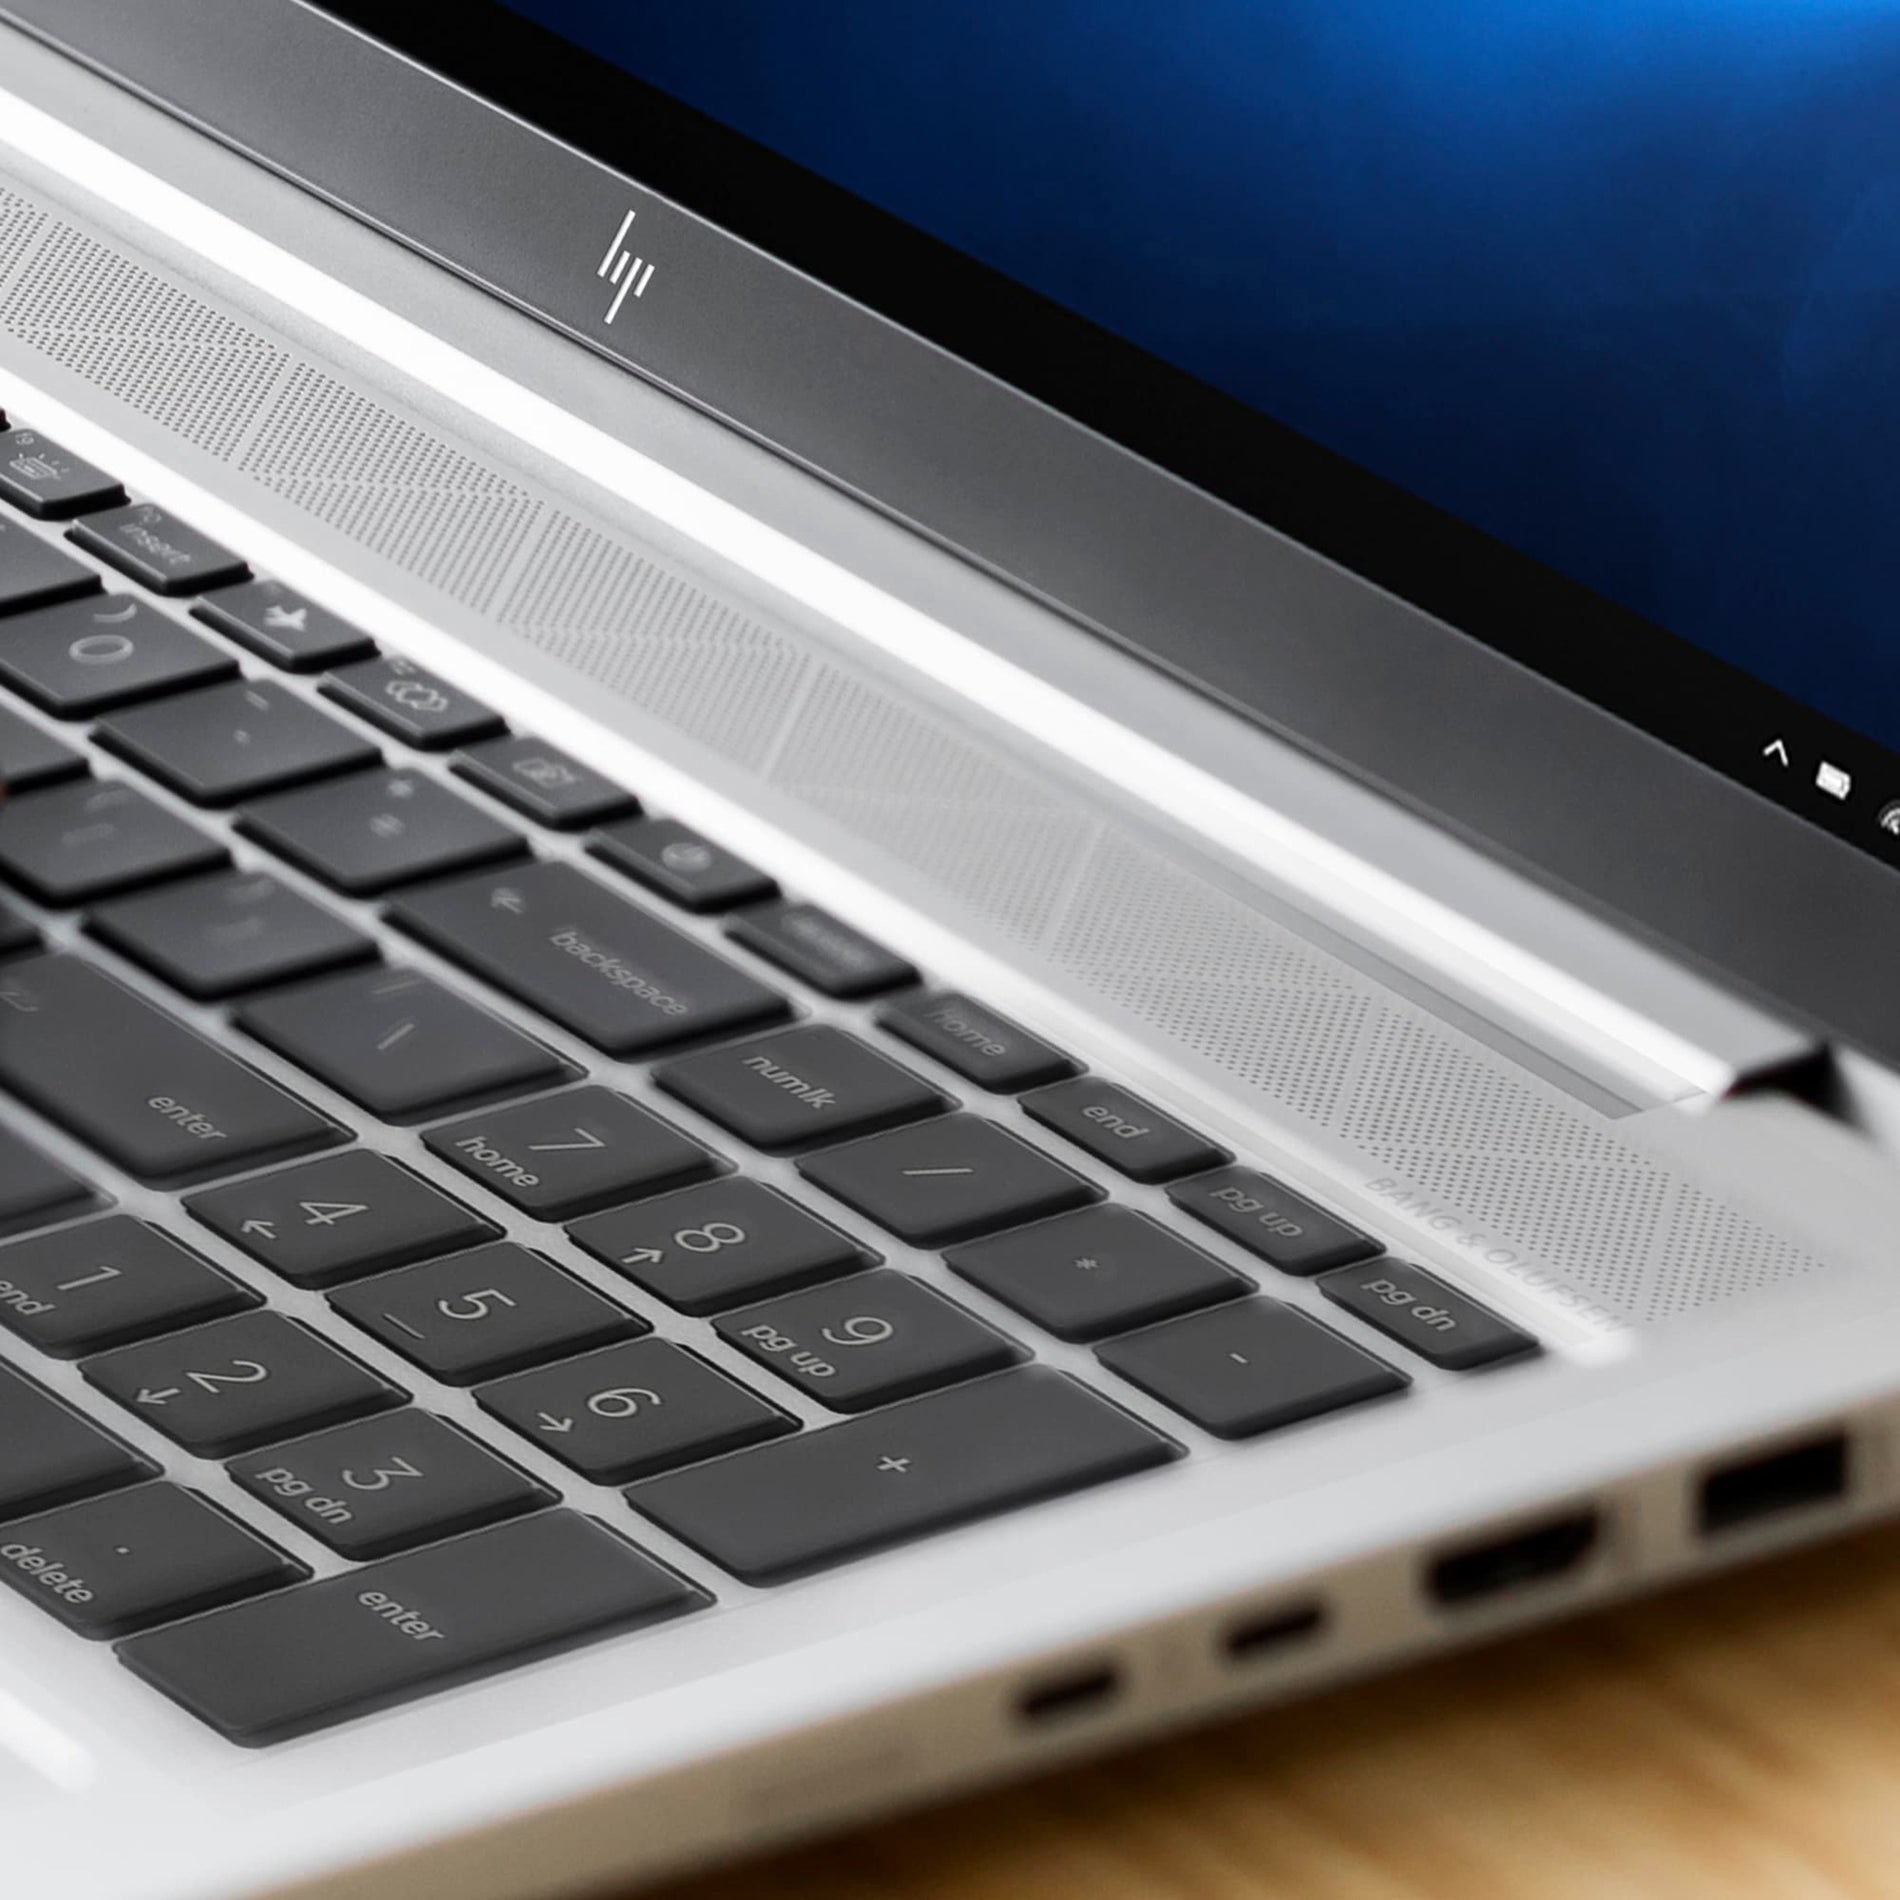 HP EliteBook 850 G8 15.6" Notebook, Intel Core i5 11th Gen, 16GB RAM, 256GB SSD, Windows 10 Pro